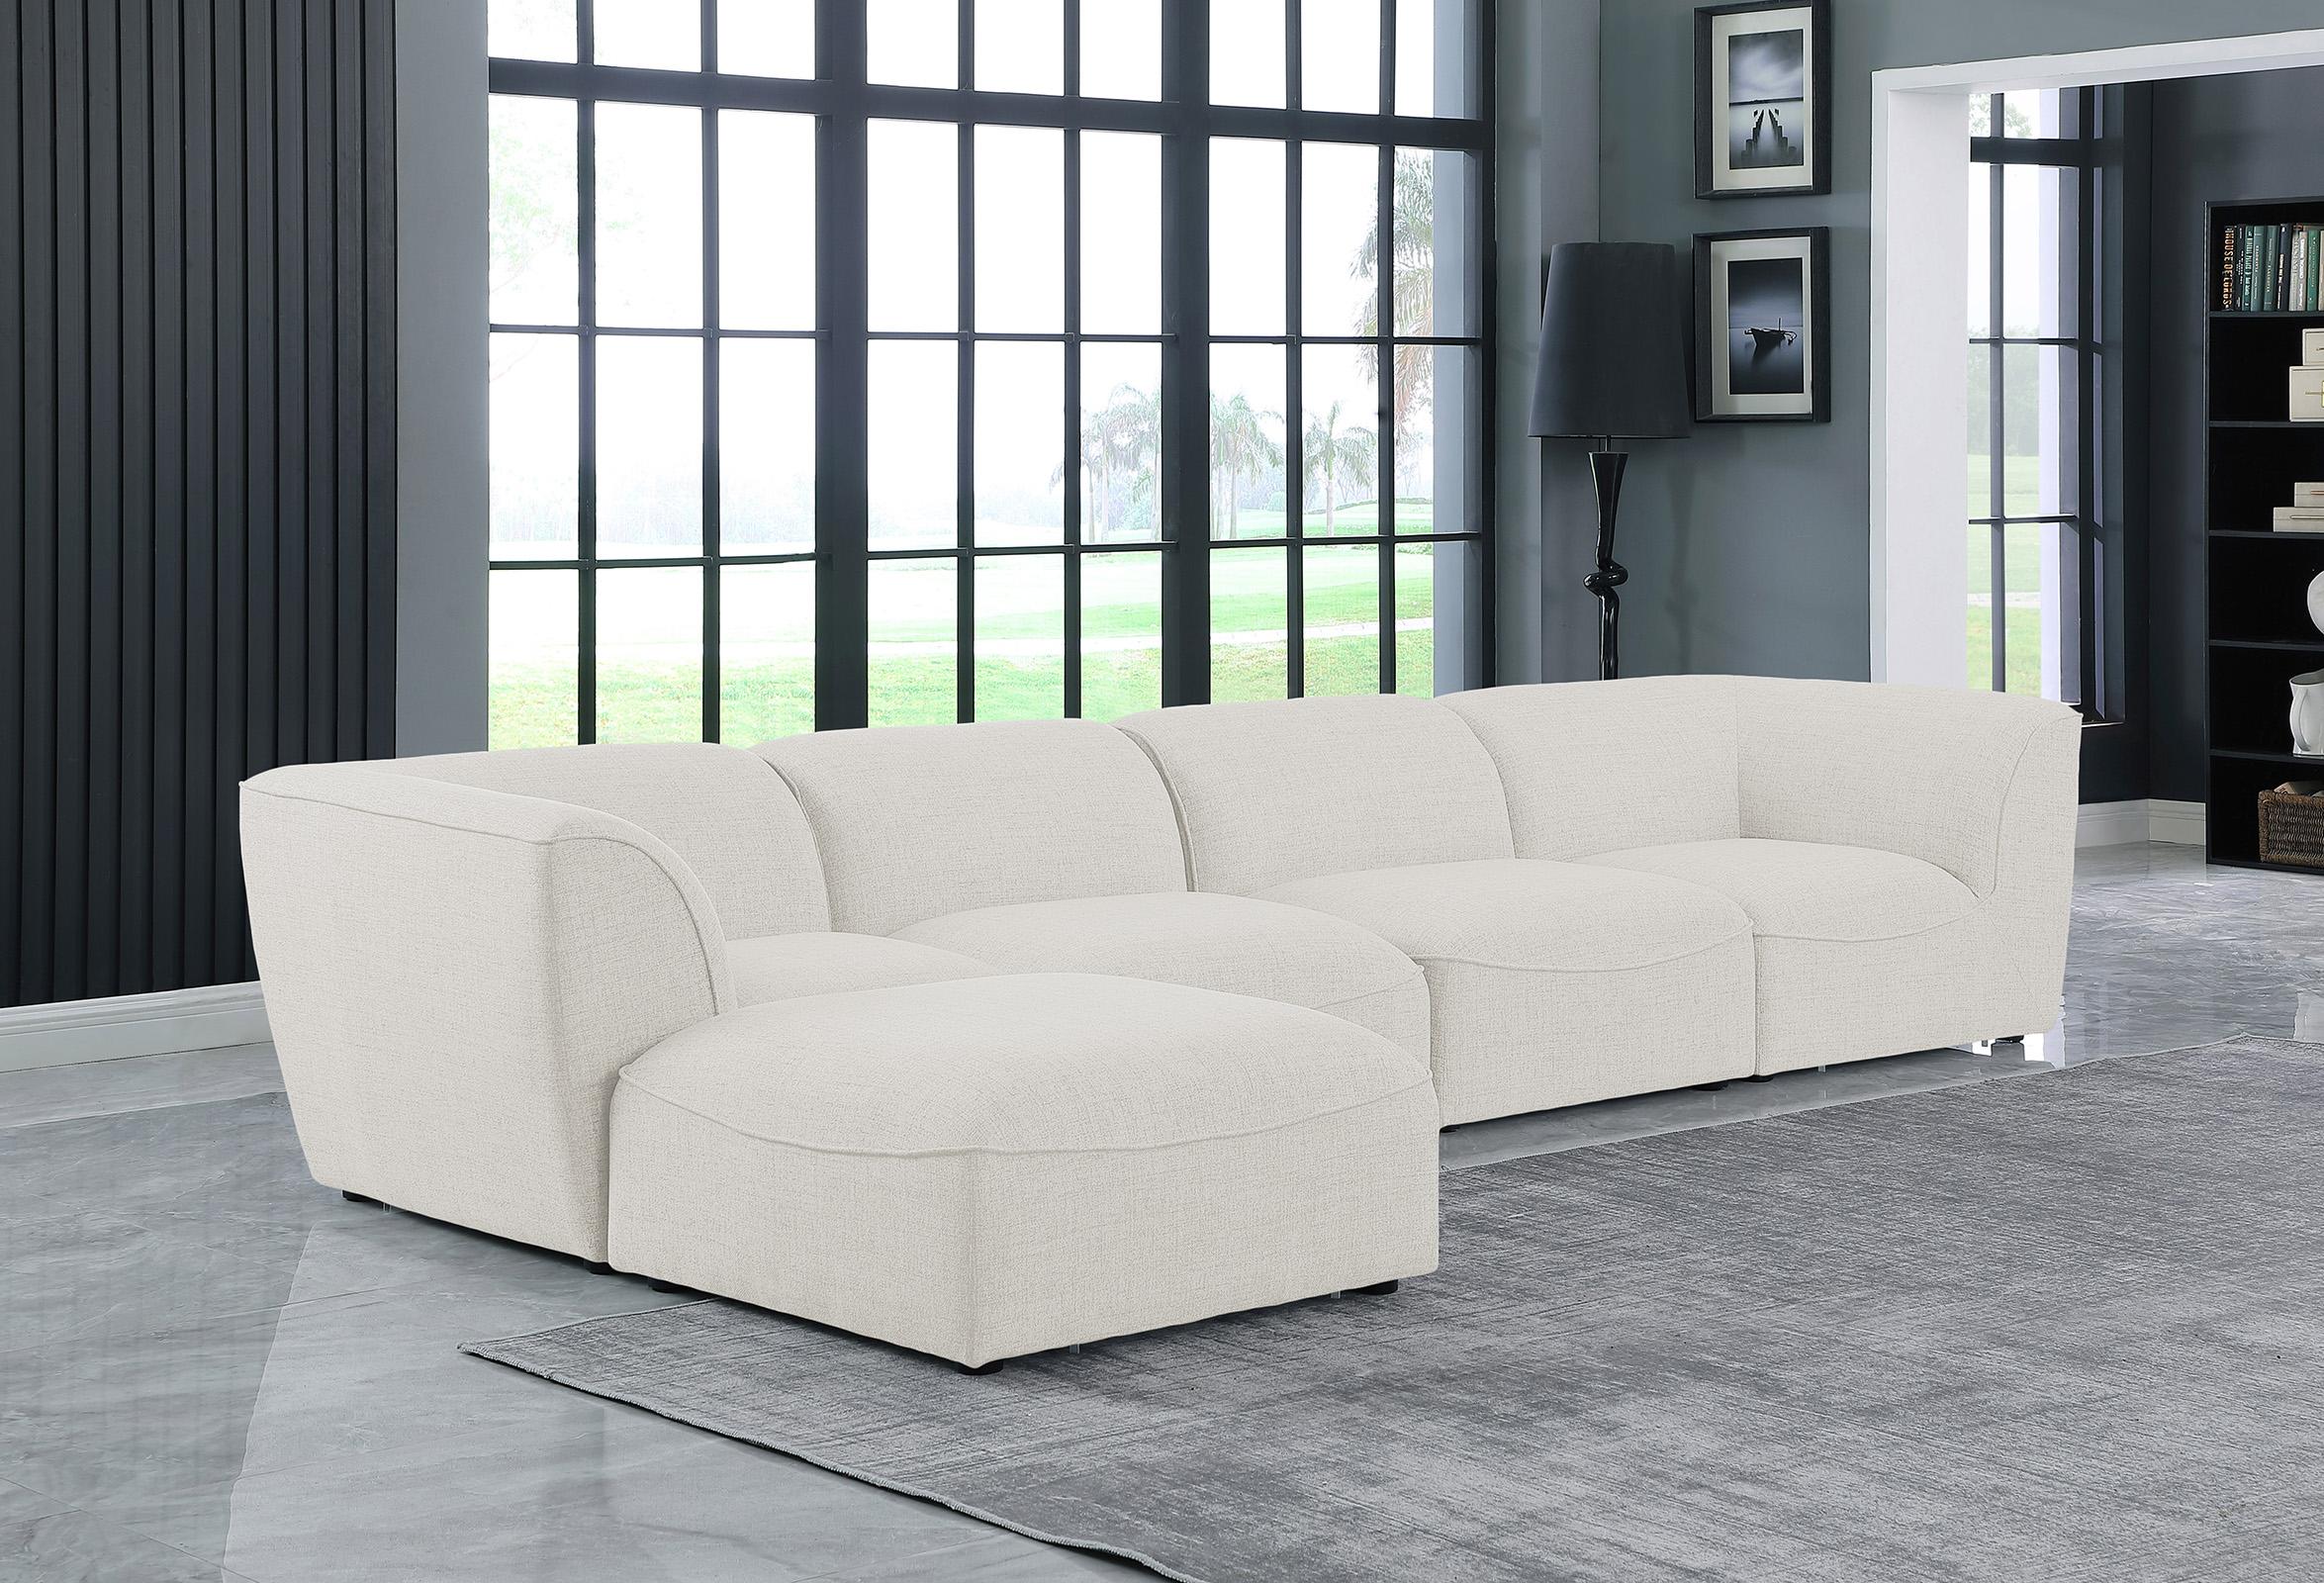 

        
Meridian Furniture MIRAMAR 683Cream-Sec5A Modular Sectional Sofa Cream Linen 94308264592
